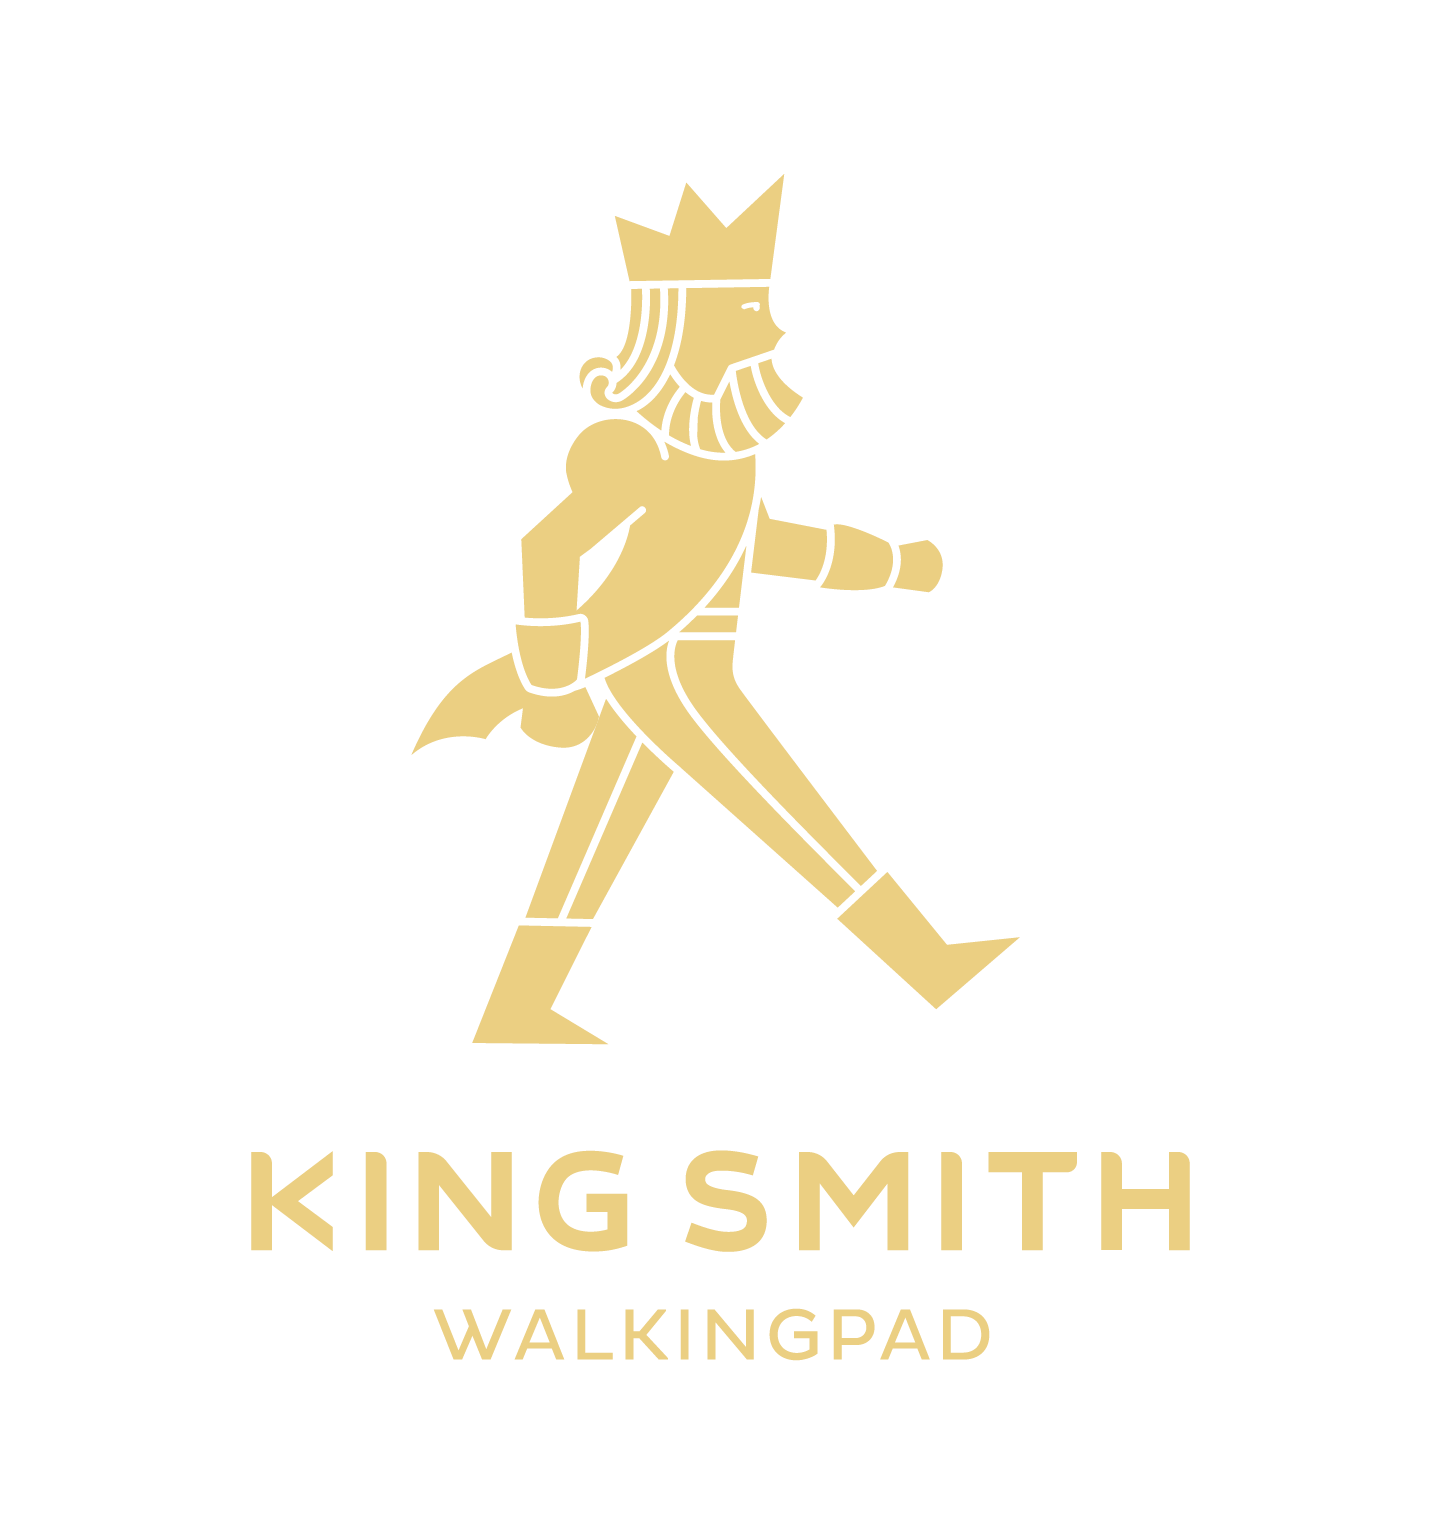 King Smith Walking Pad